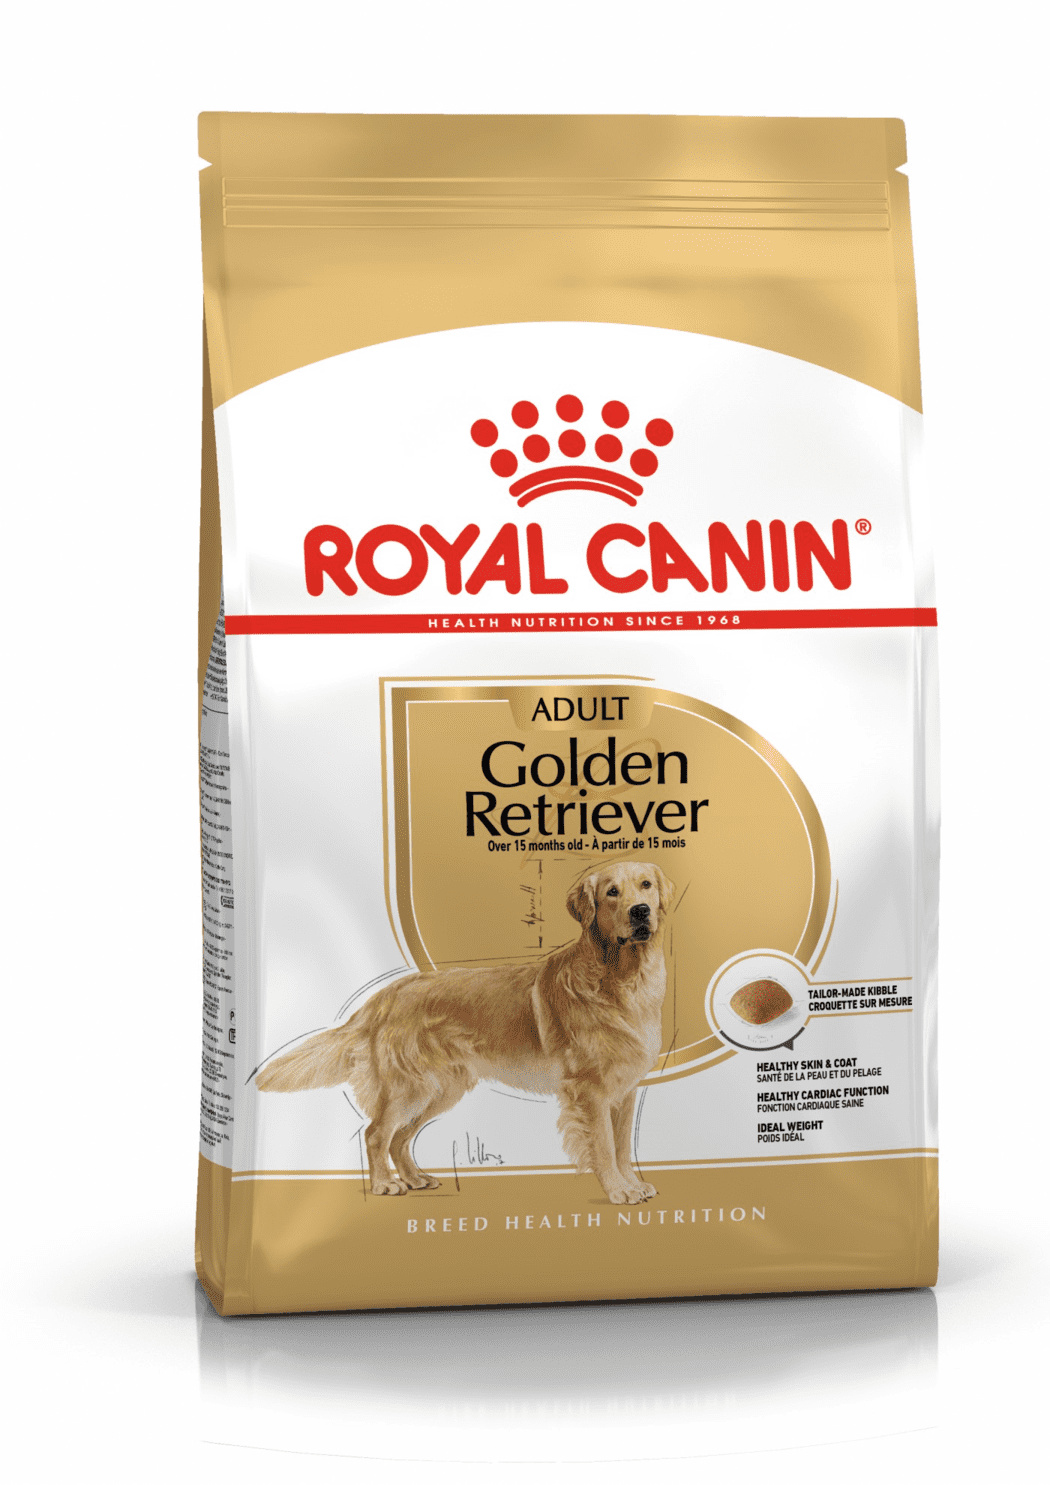 Royal Canin Корм Royal Canin для взрослого голден ретривера с 15 месяцев (12 кг) корм для собак royal canin golden retriever для породы голден ретривер от 15 месяцев сух 12кг